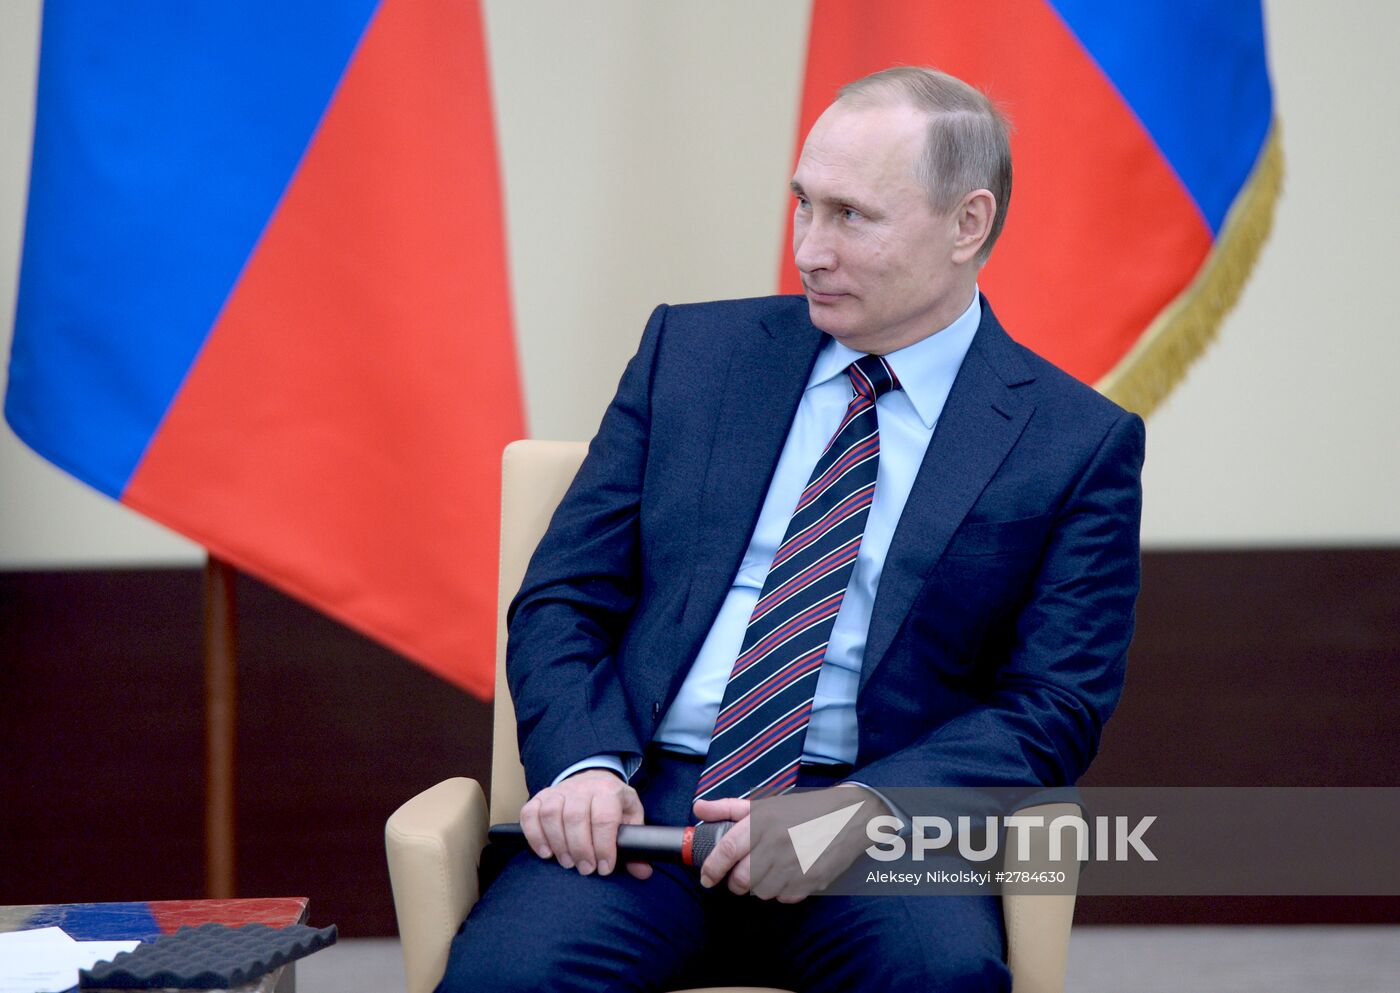 President Vladimir Putin meets with Leaders Club core group